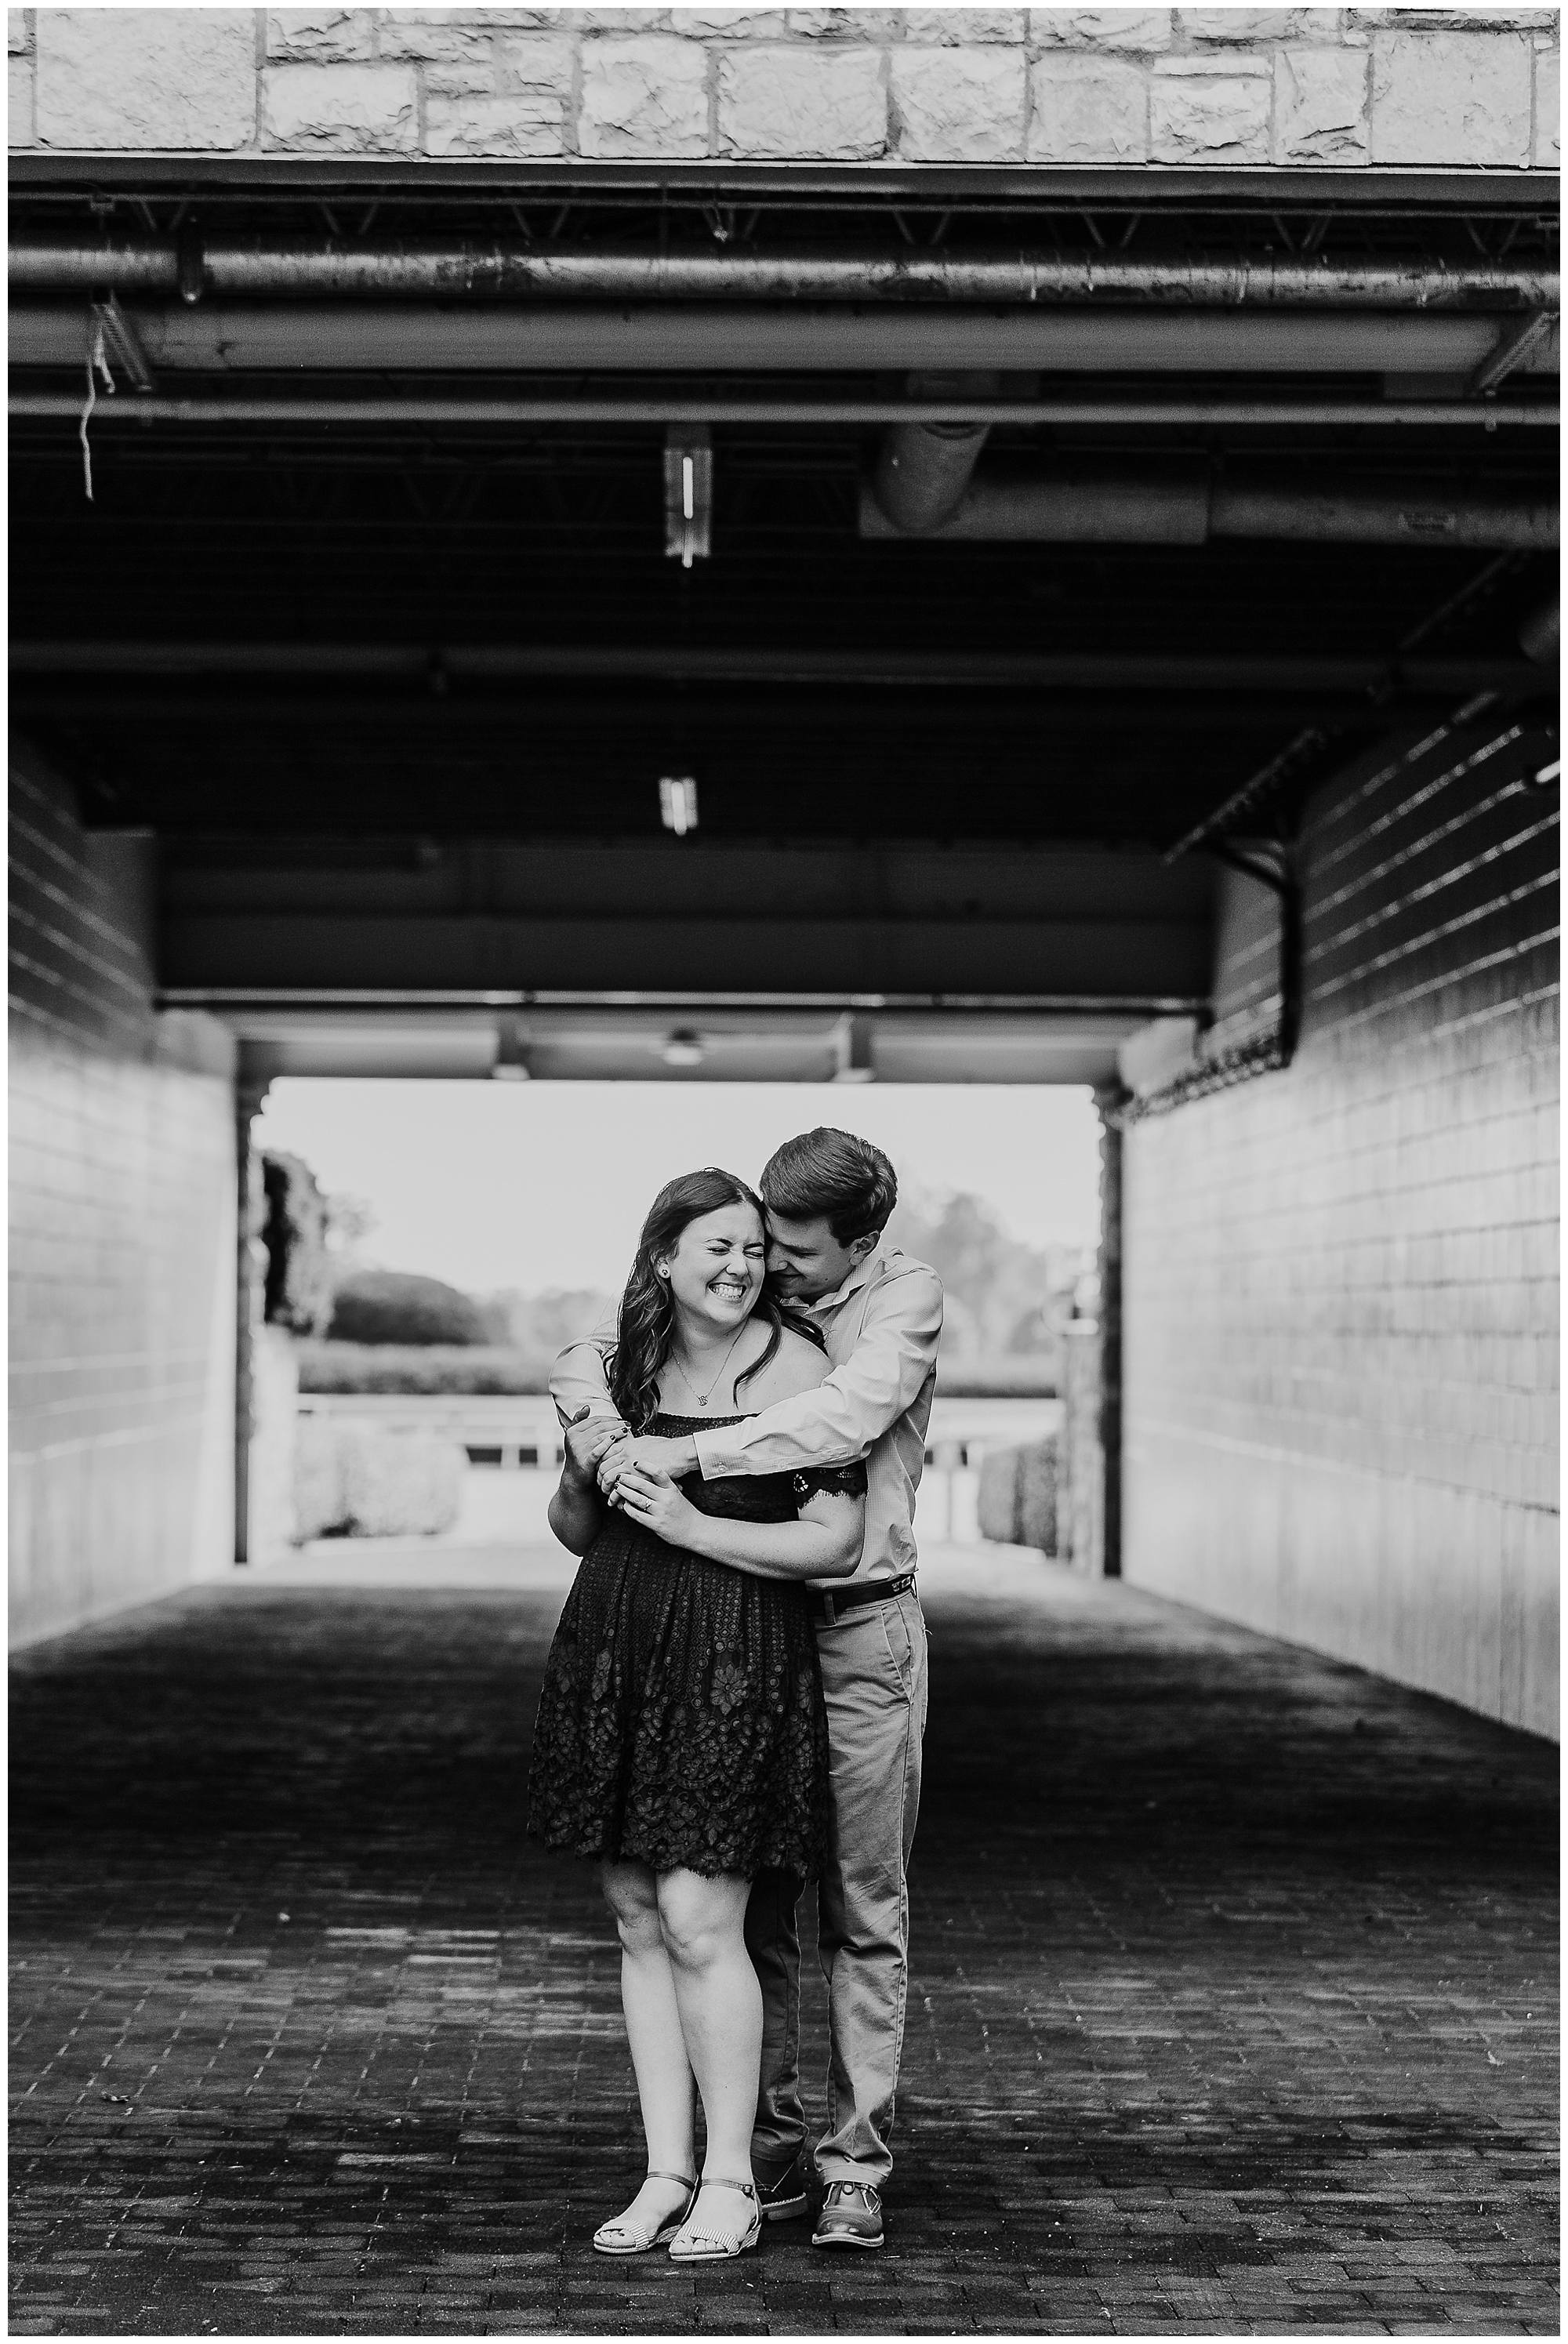 Louisville wedding photographer, Lexington Wedding Photographer, engaged, engagement photos, Keeneland